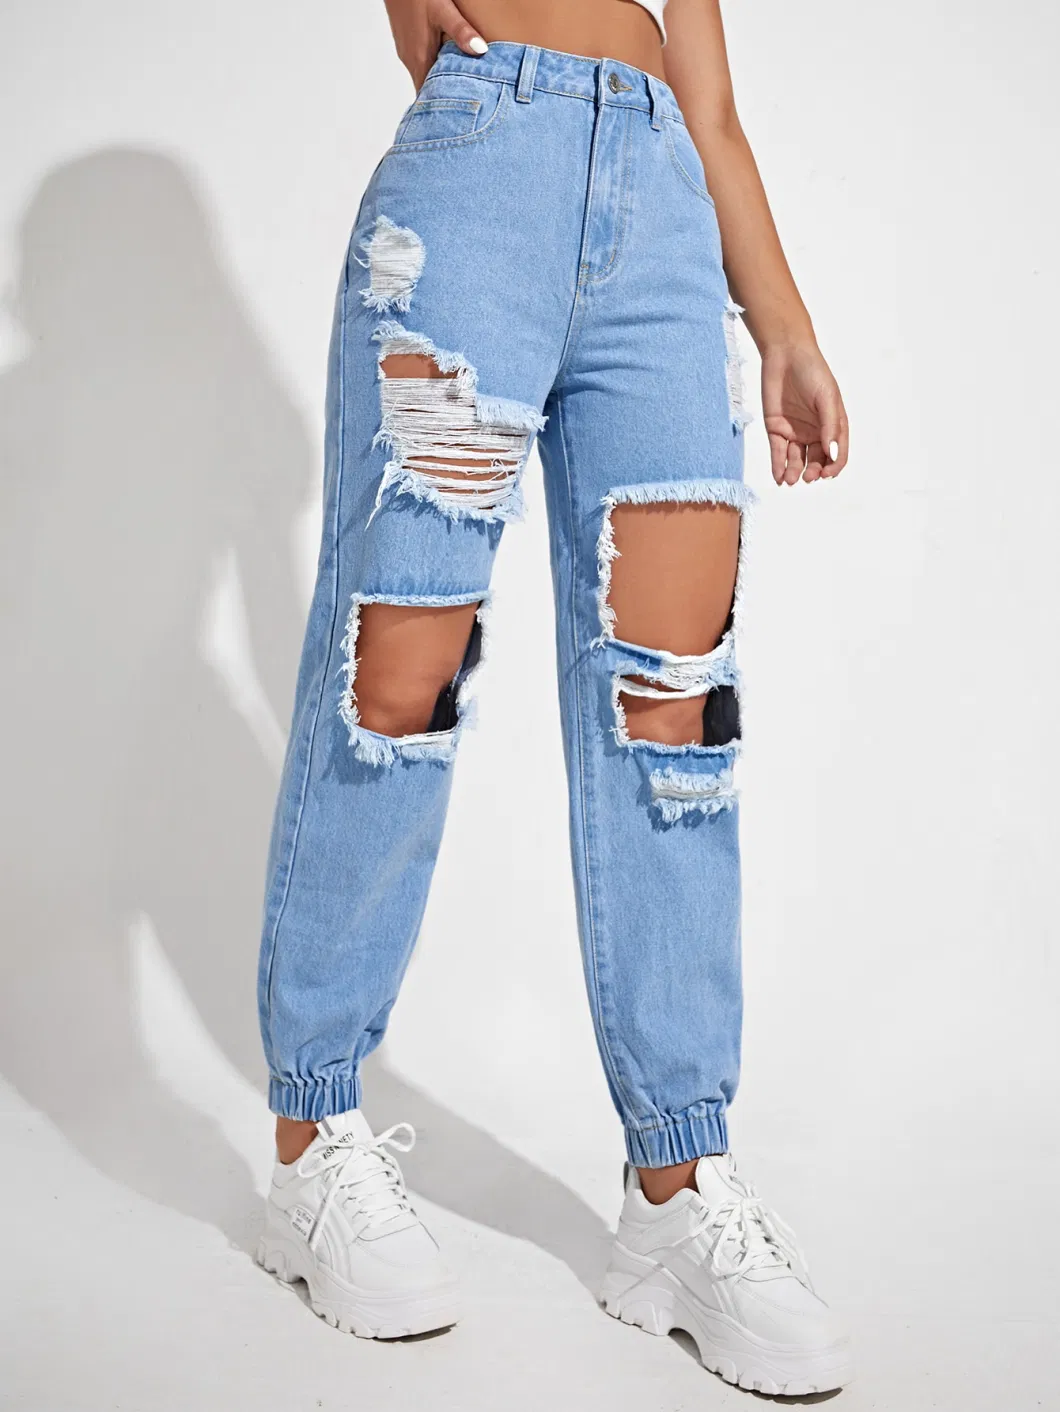 High Waisted Scratch Holes Non-Stretch Quality Elastane Bottom Hem New Fashion Lady Jeans Light-Blue Boyfrind Fit Jeans